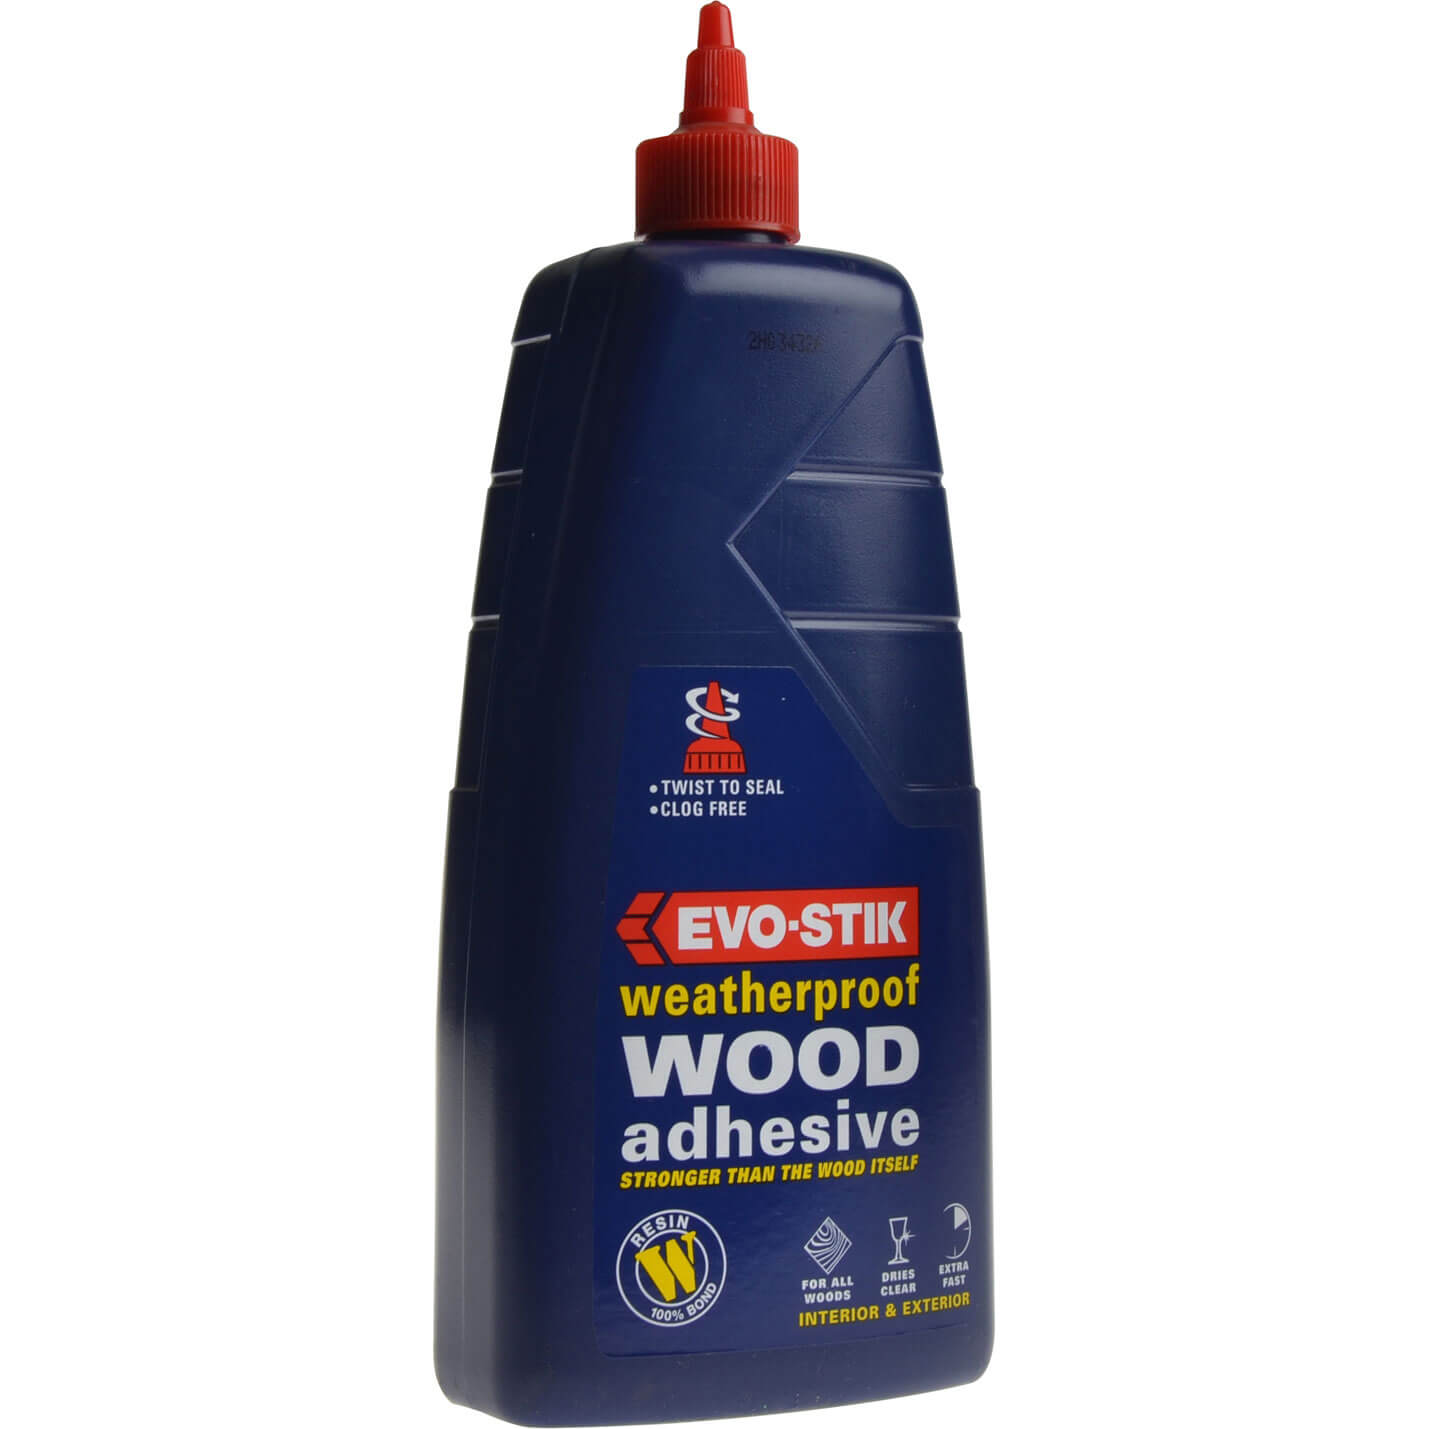 Evostik Wood Adhesive Weatherproof 1L 717916